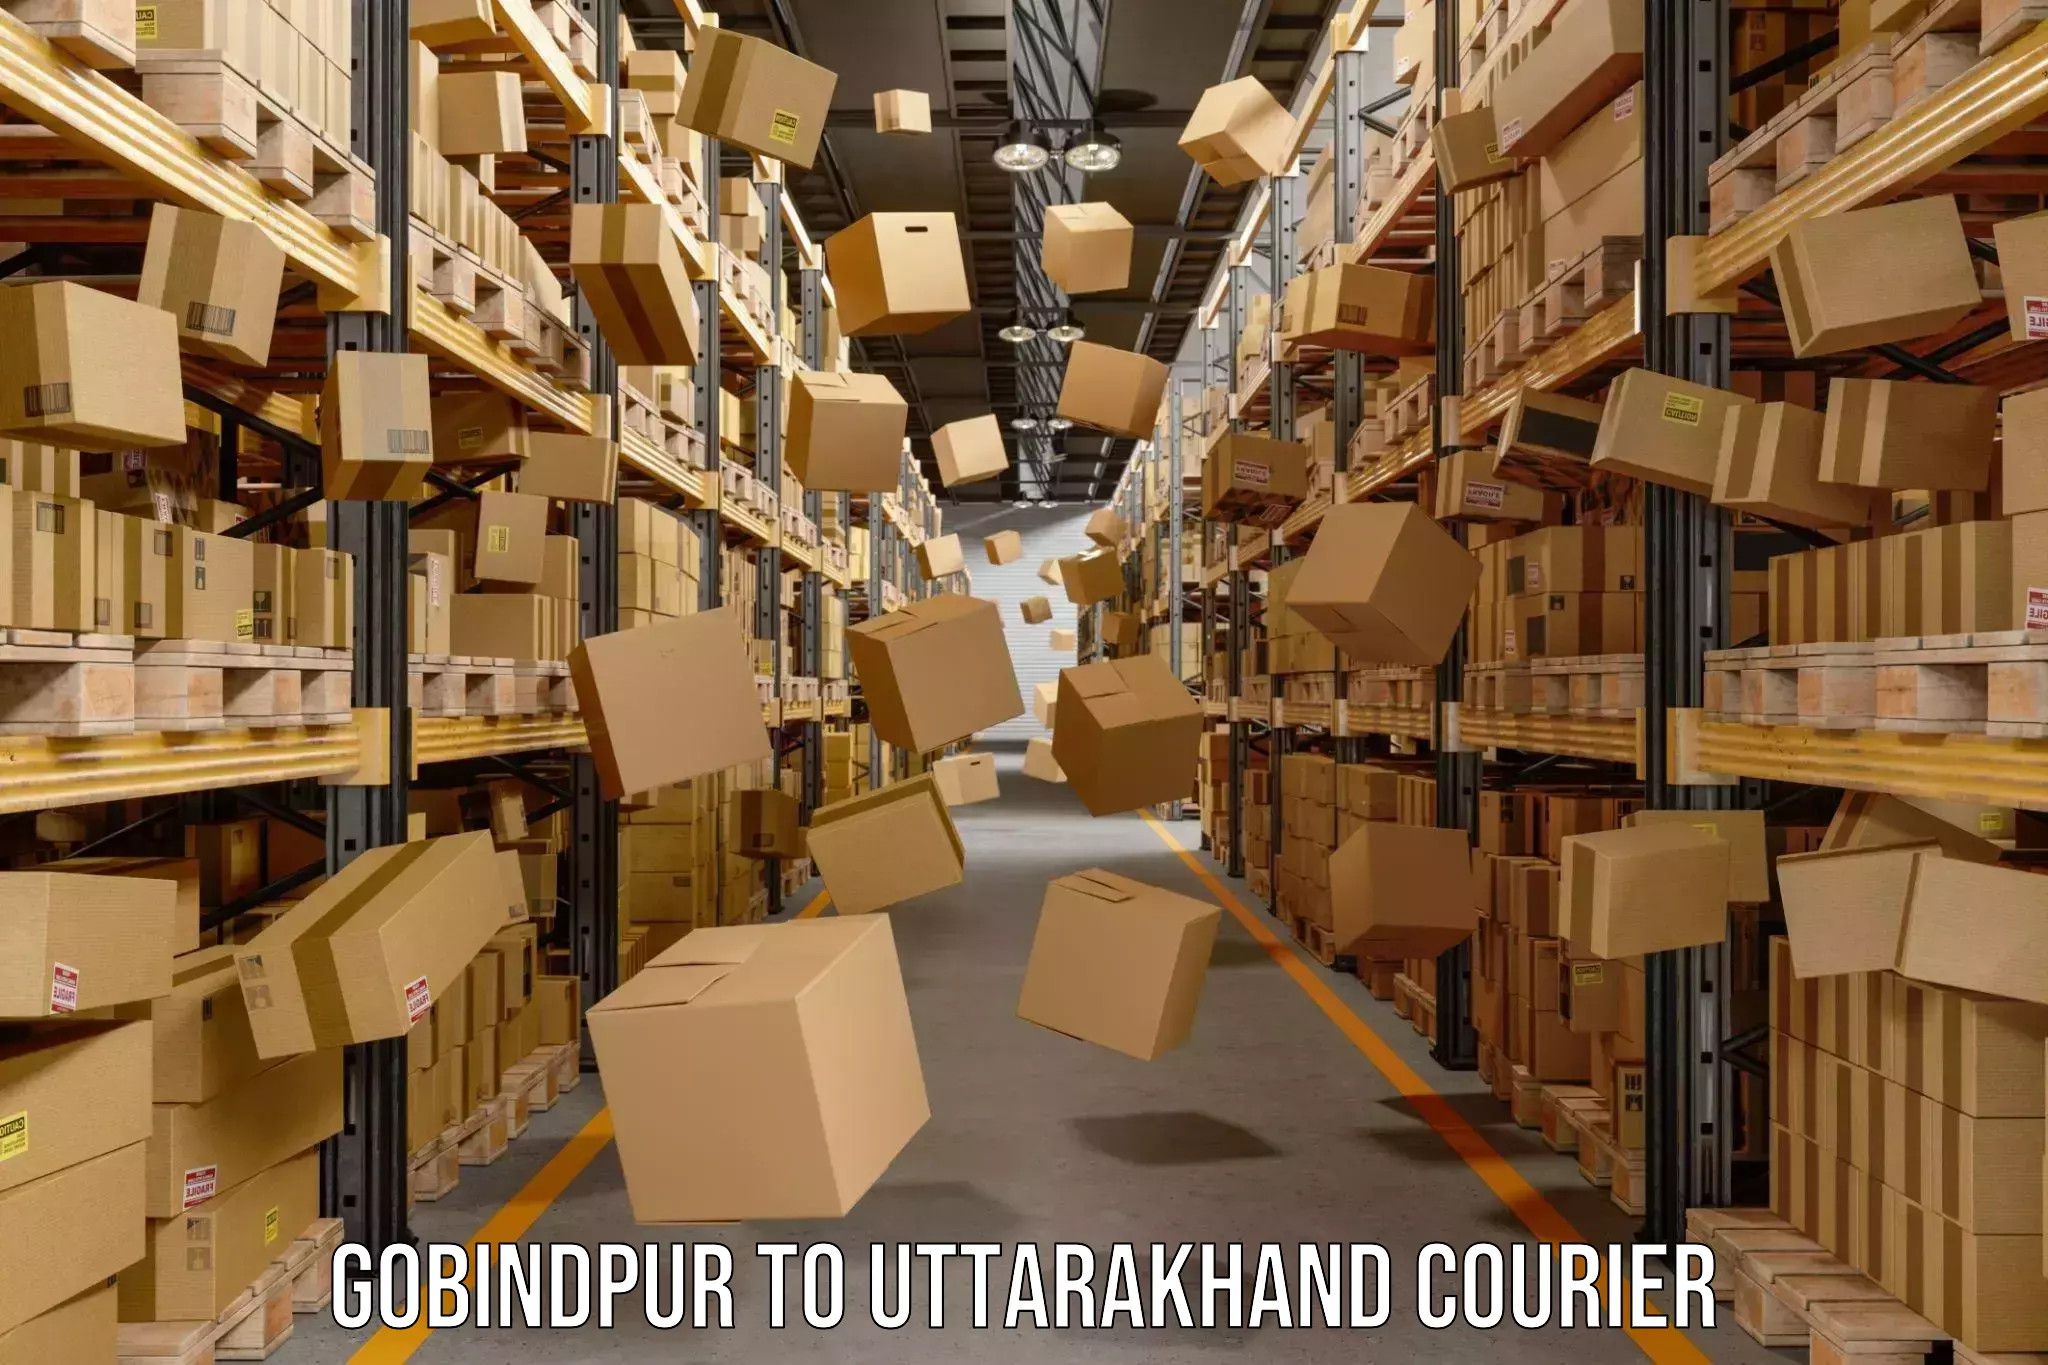 Package delivery network Gobindpur to Uttarakhand